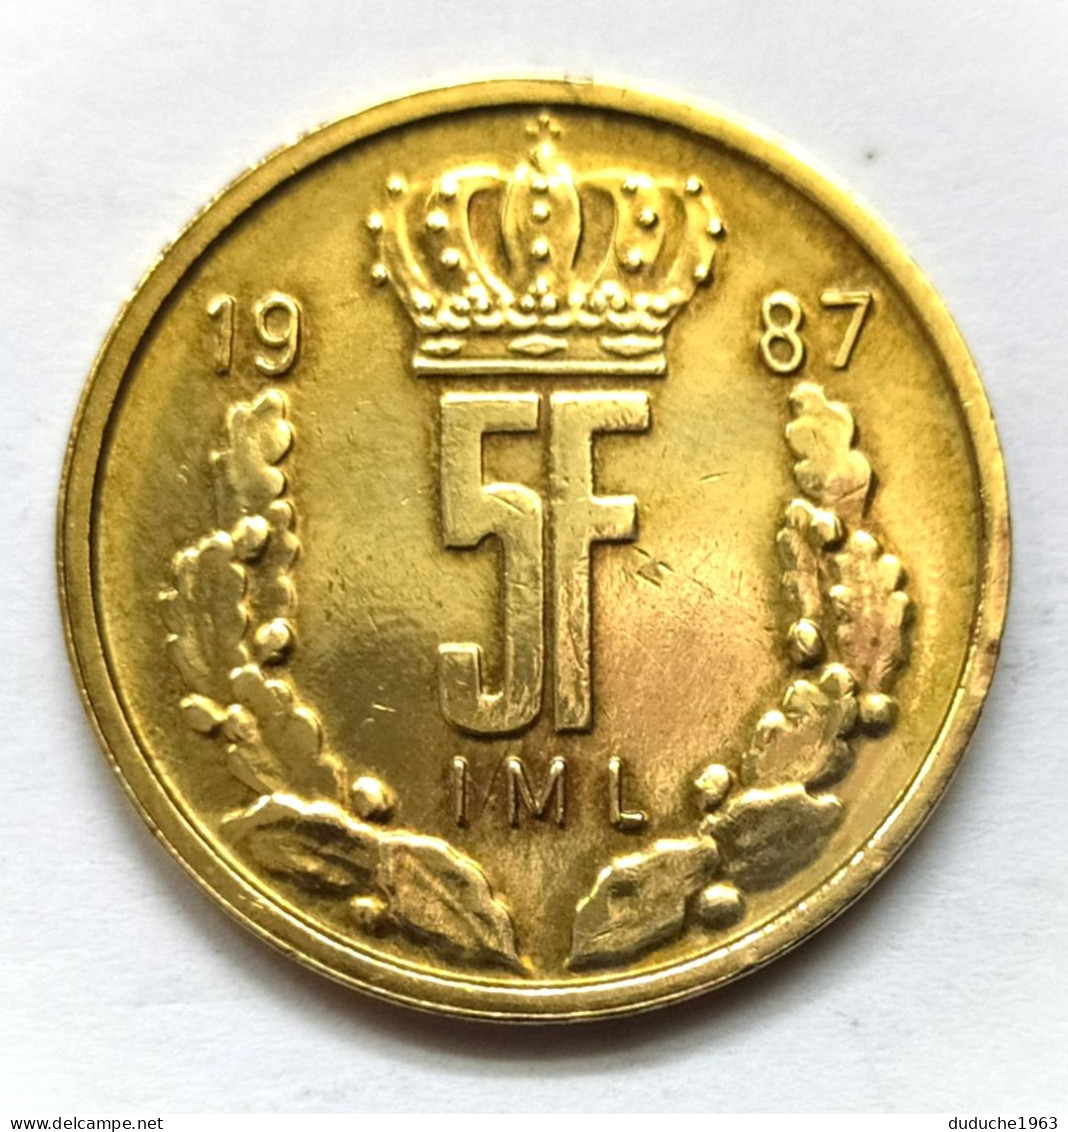 Luxembourg - 5 Francs 1987 - Luxemburgo